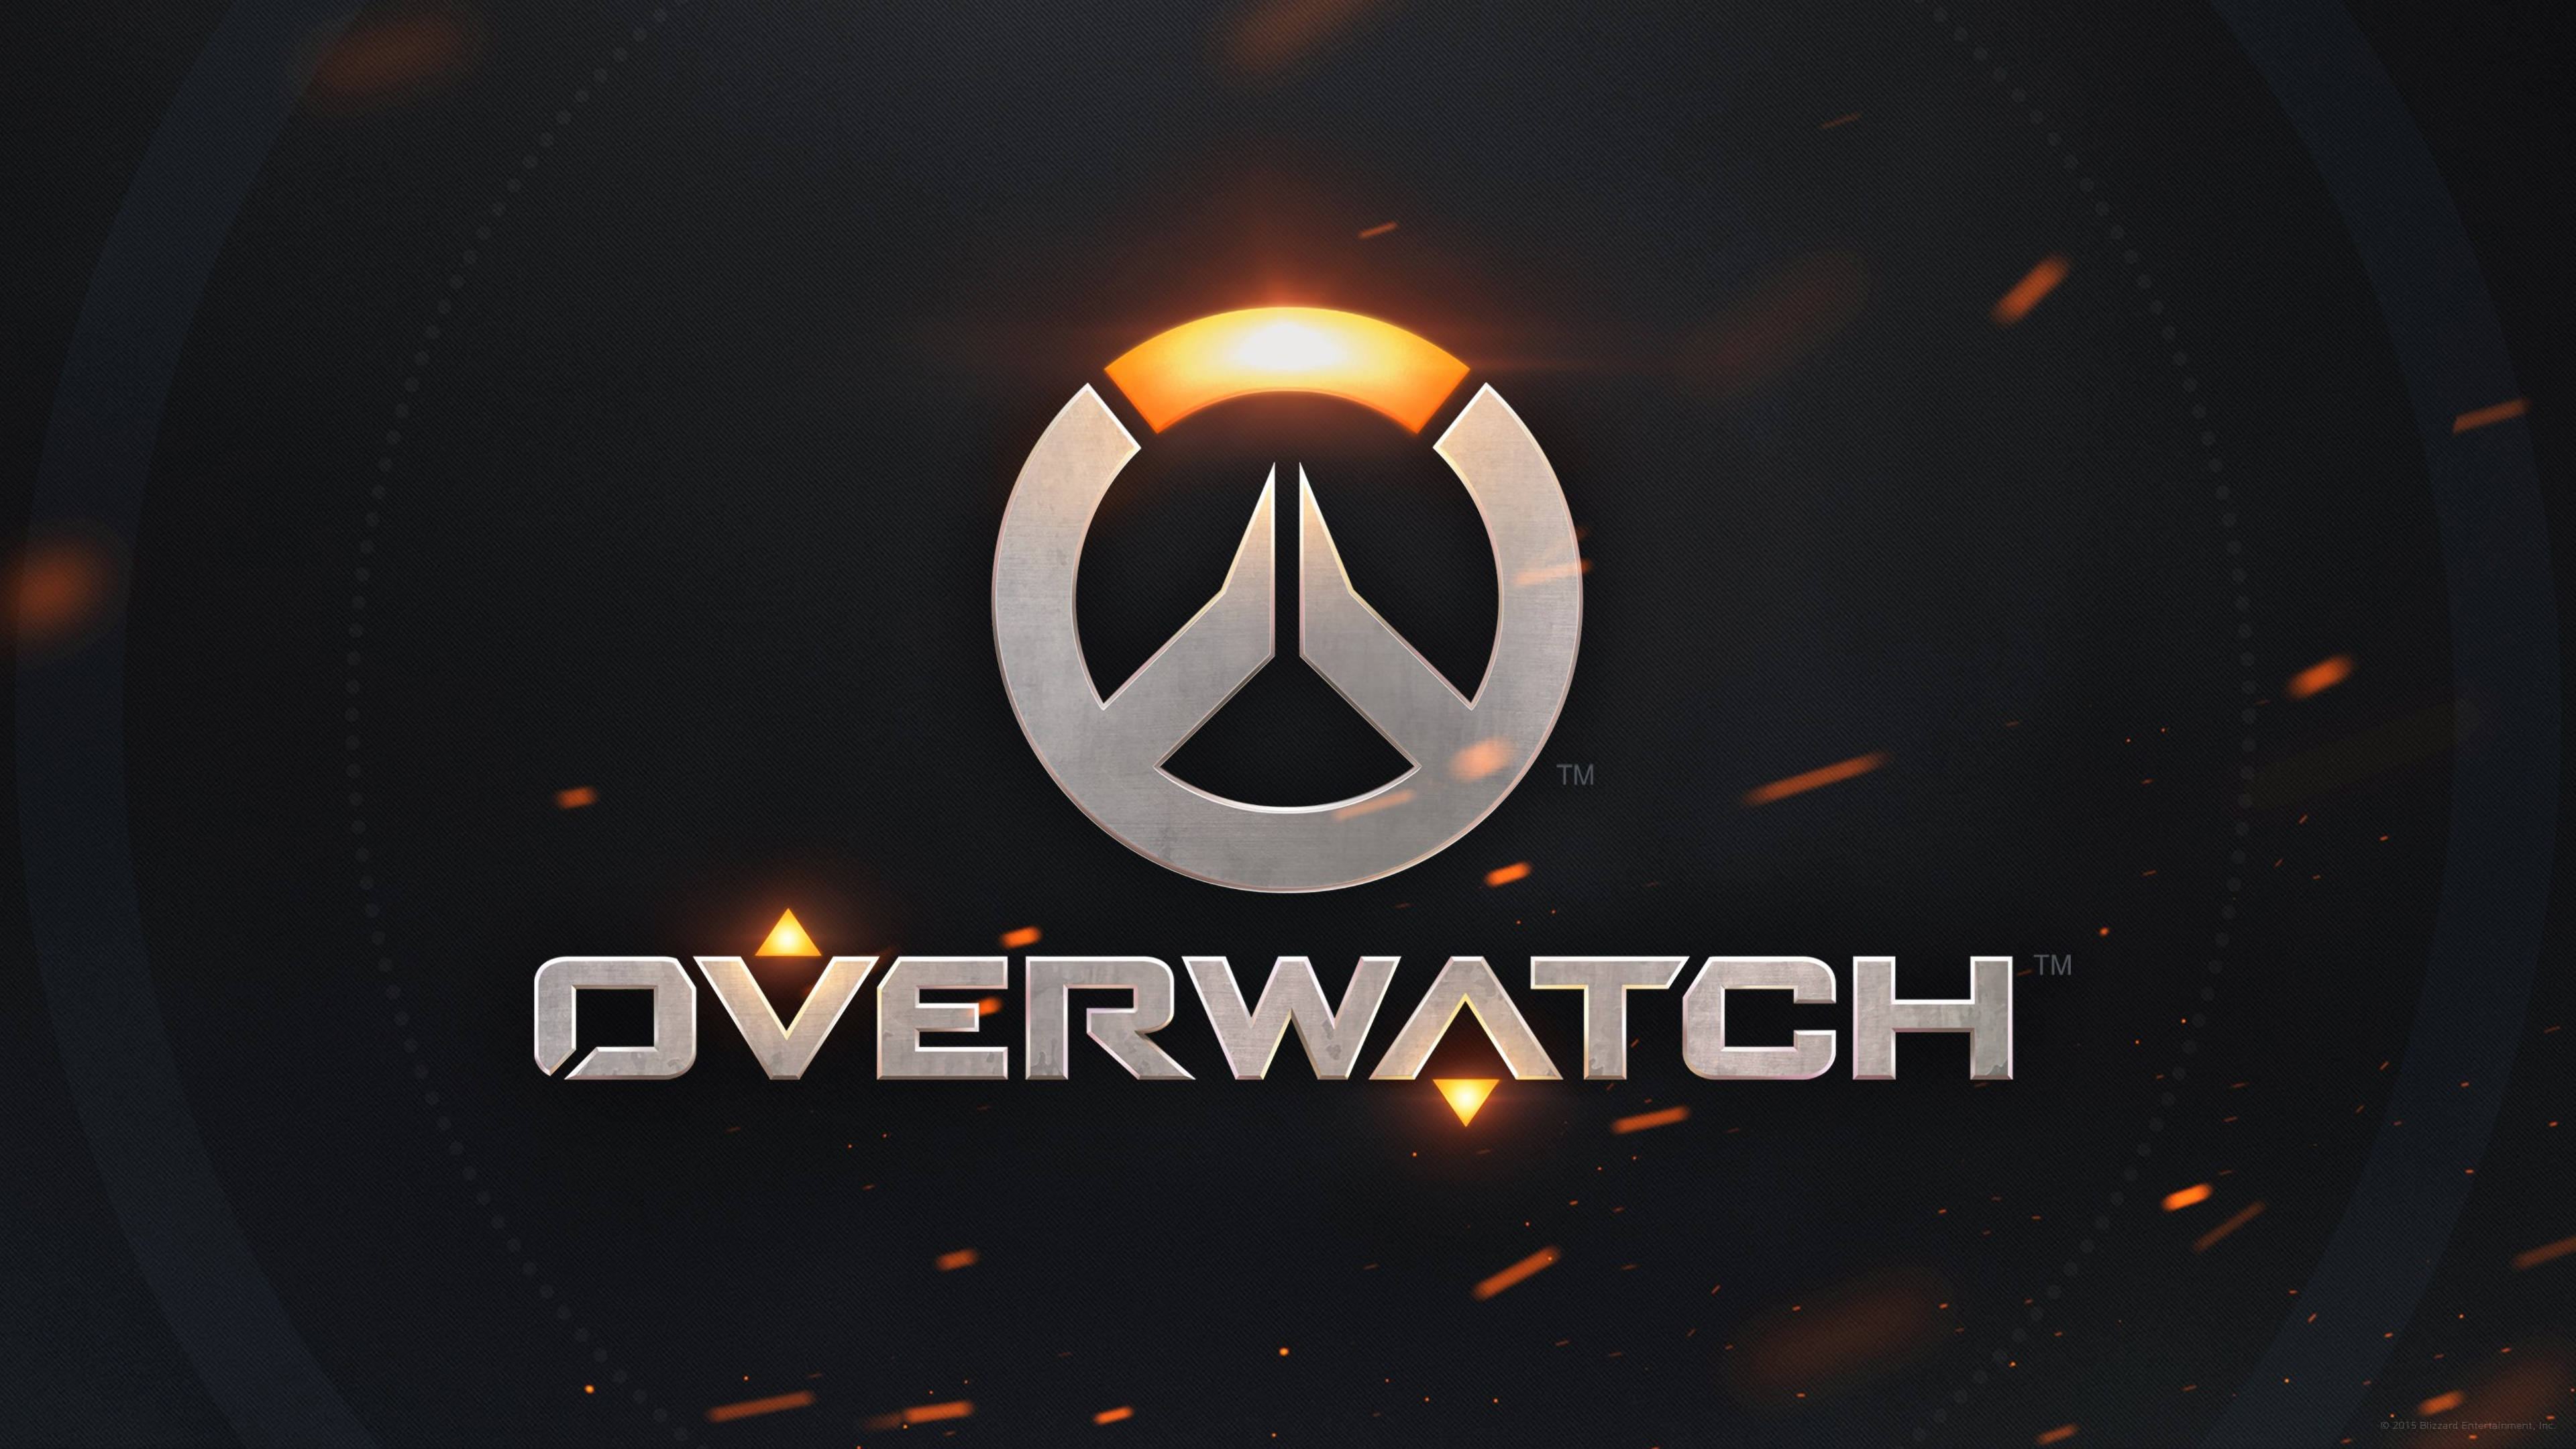 Overwatch HD Wallpaper Background Image